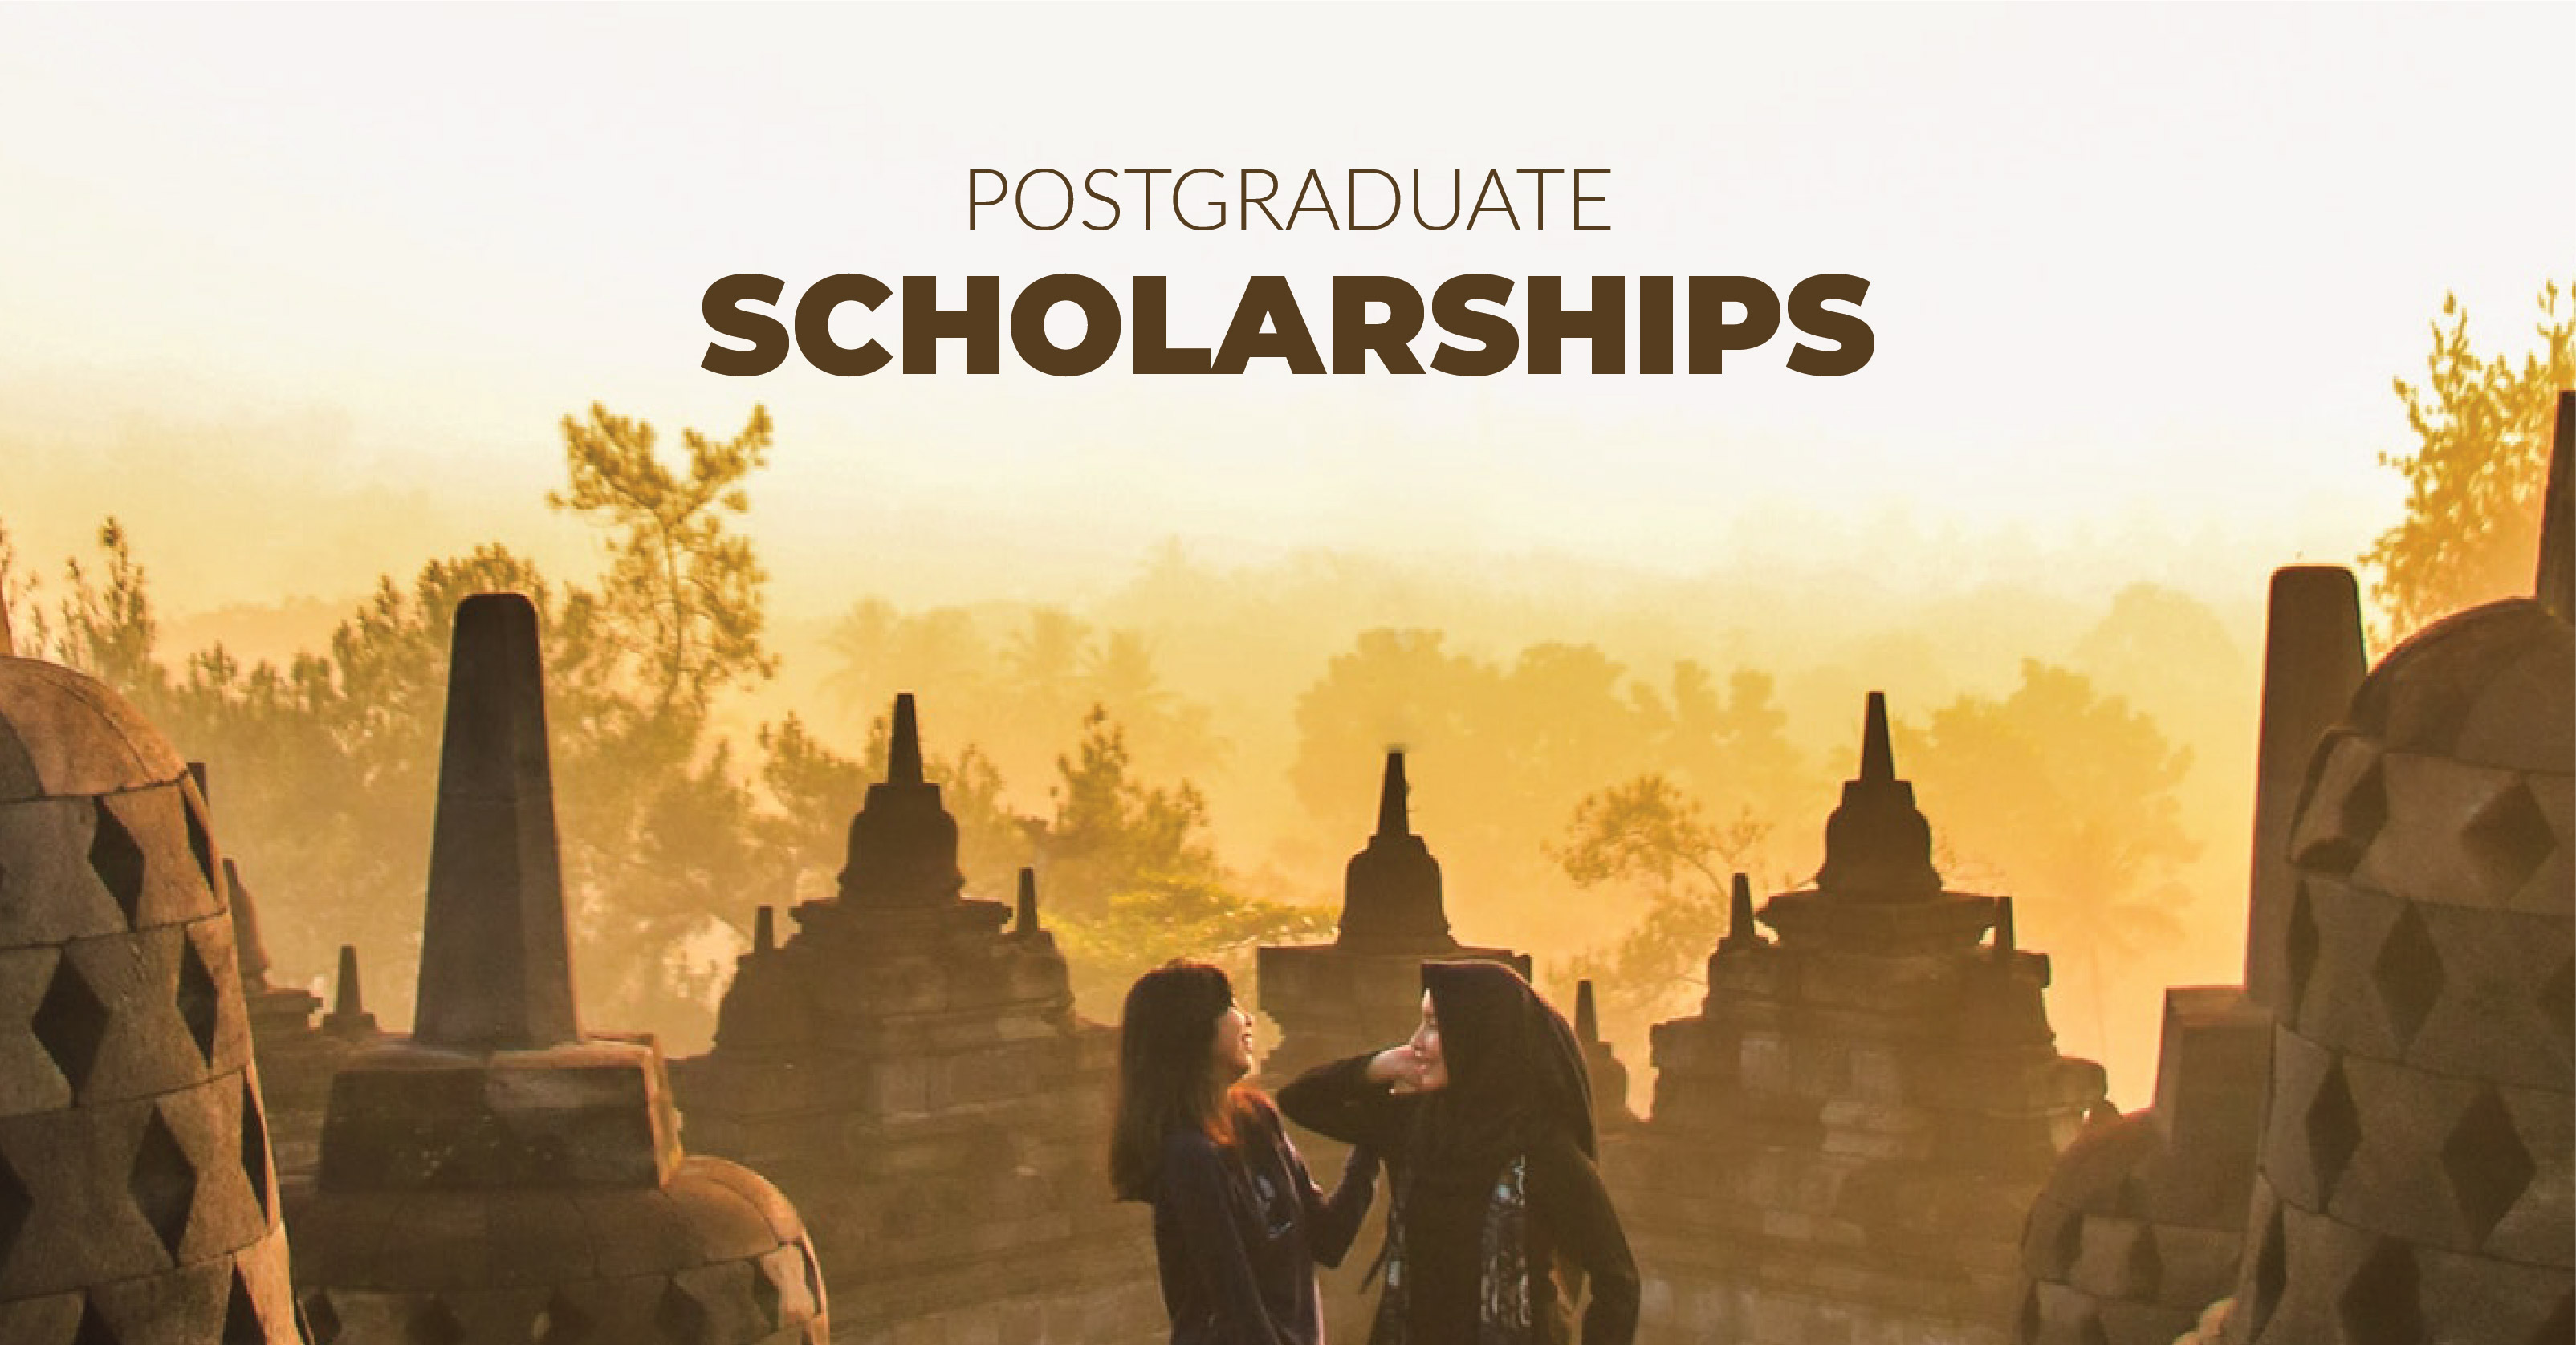 Republic of Indonesian offering postgraduate scholarships